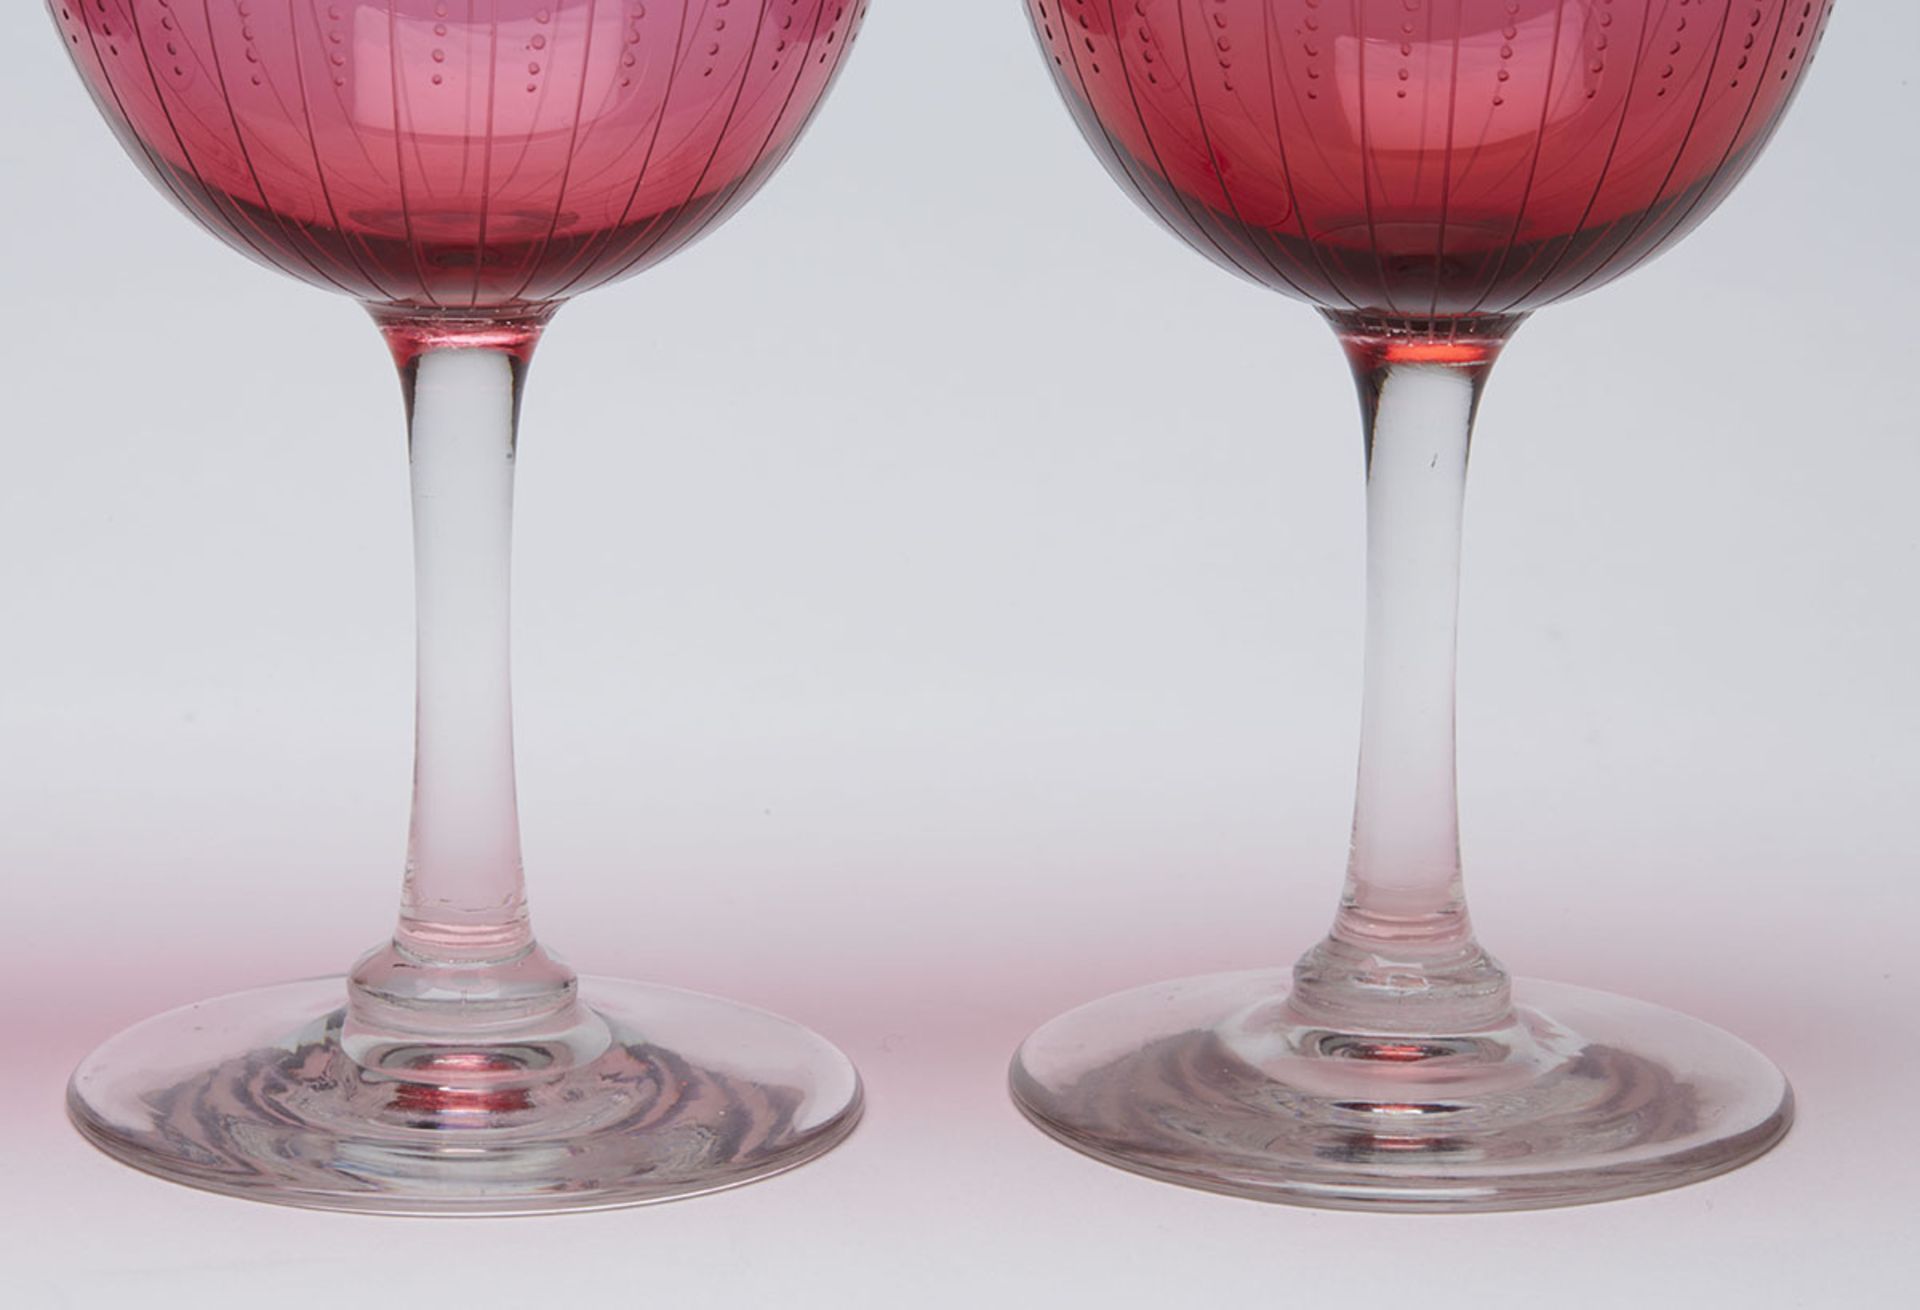 Four Antique Wheel Cut Cranberry Wine Glasses 19Th C. - Image 4 of 7